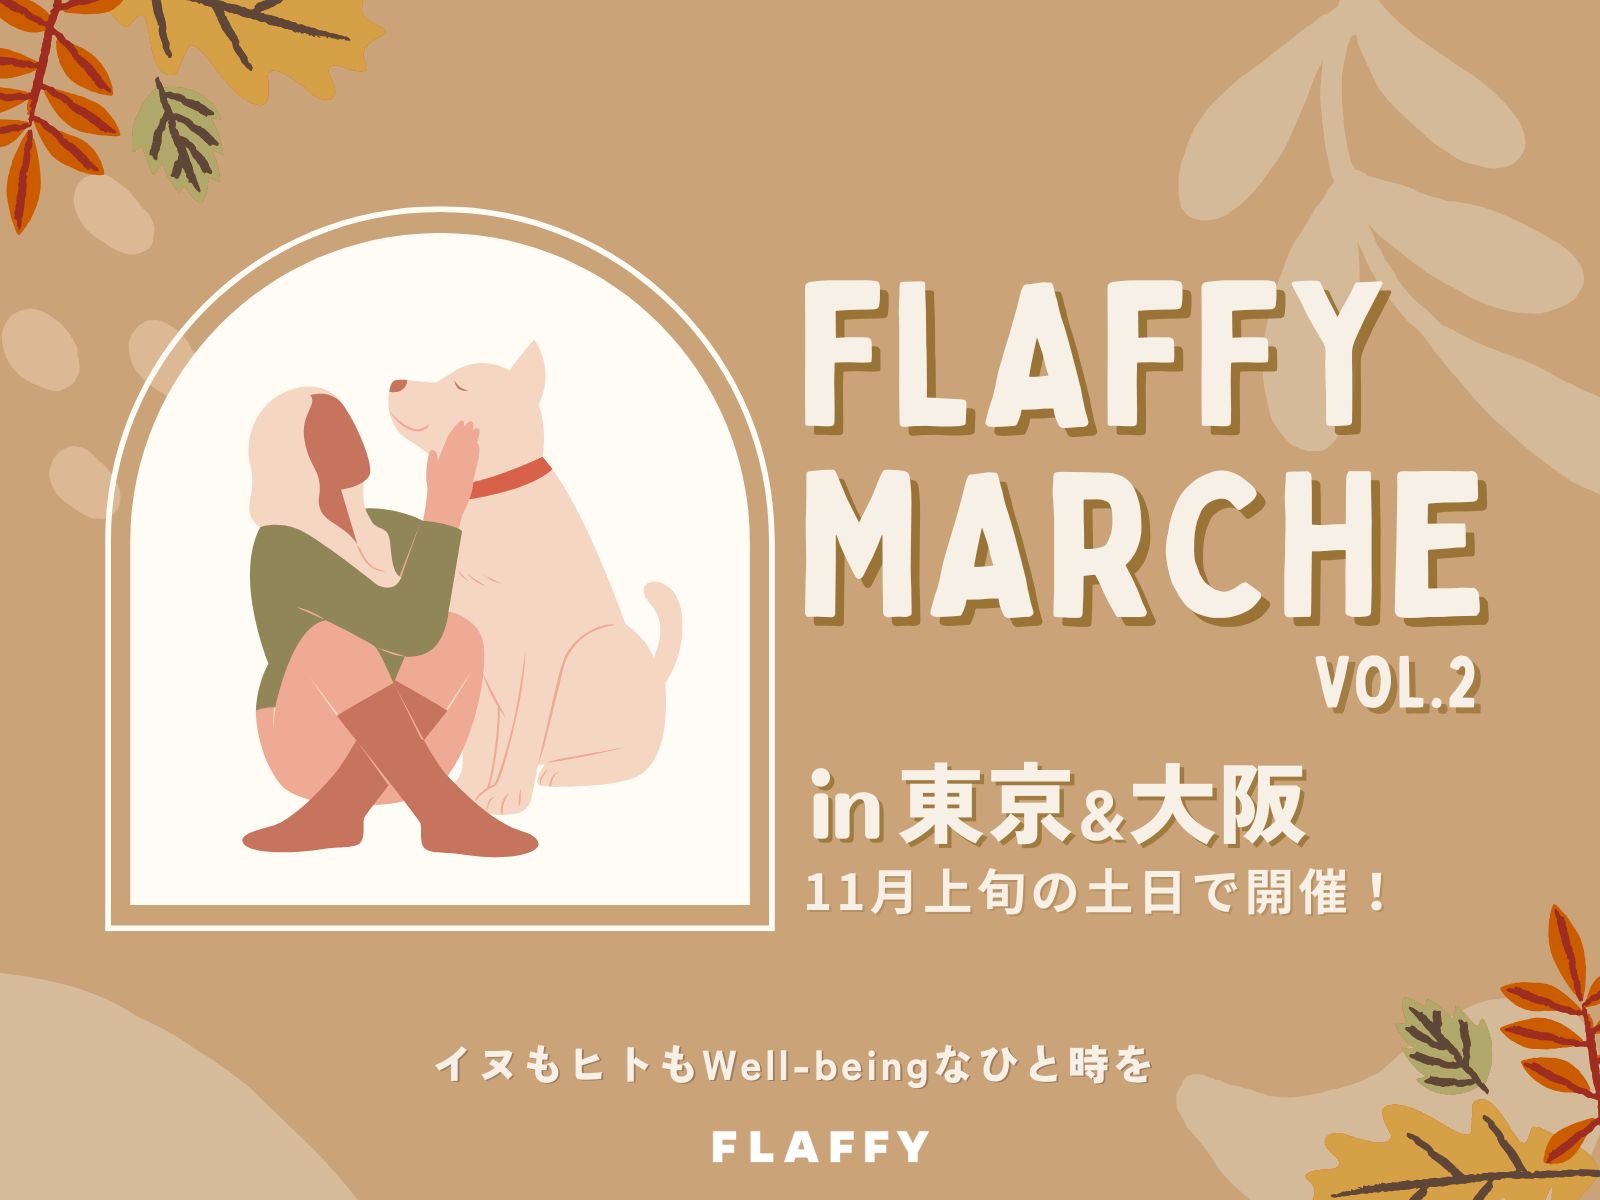 FLAFFY Marche vol.2